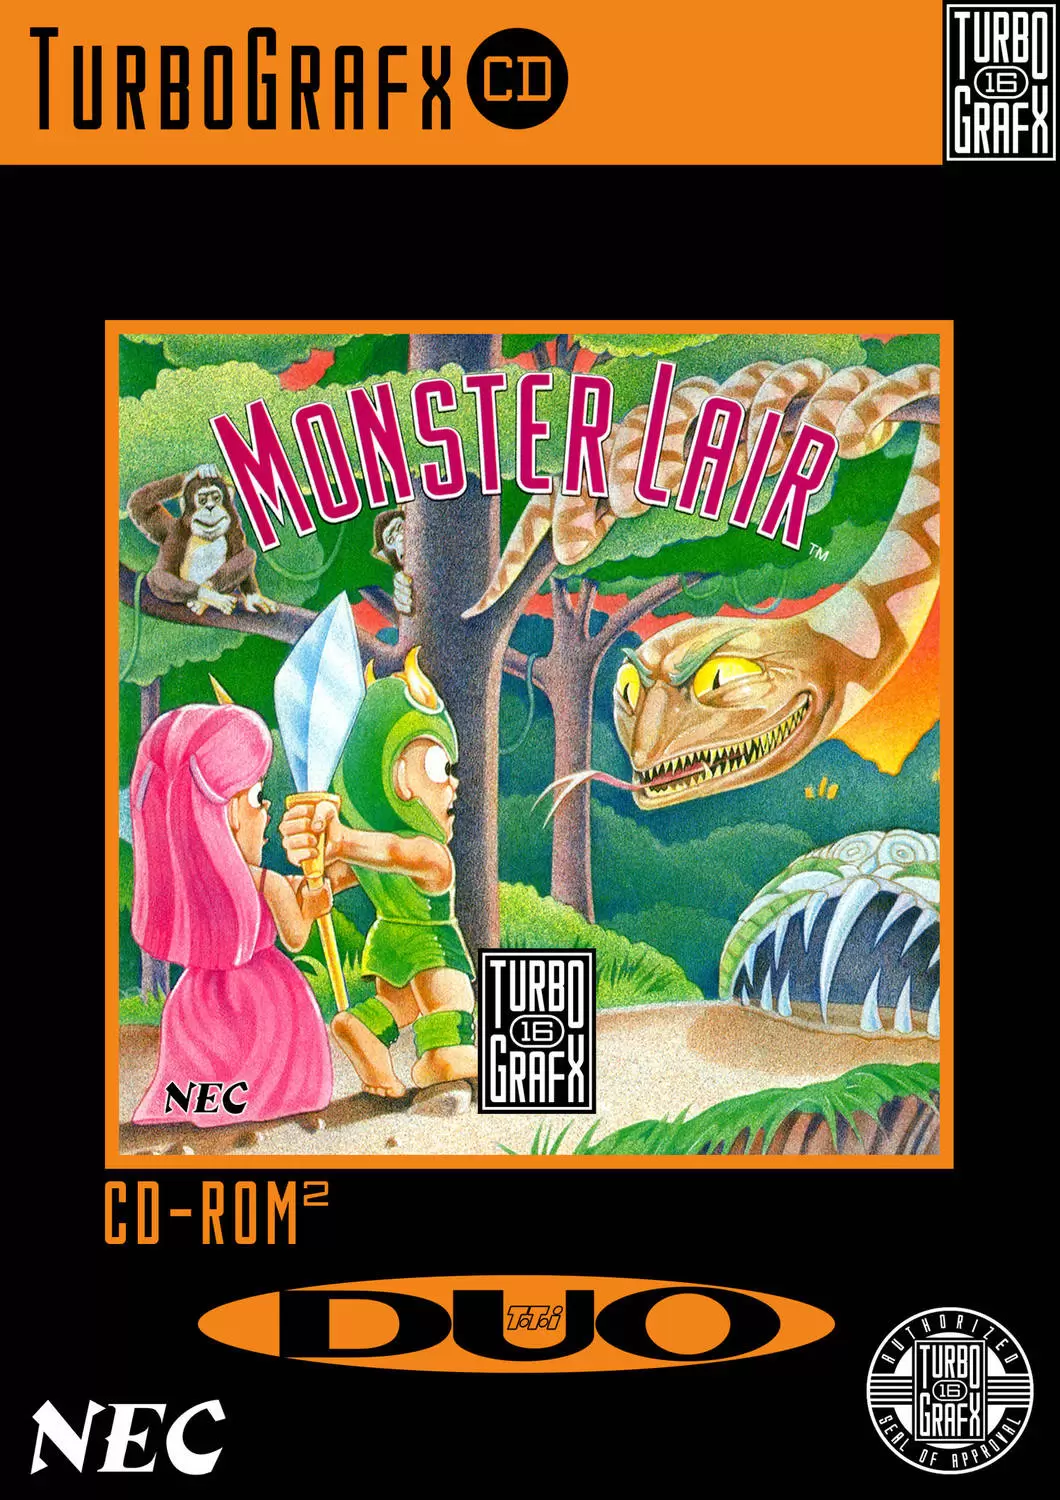 Turbo Grafx 16 (PC Engine) - Wonder Boy III: Monster Lair